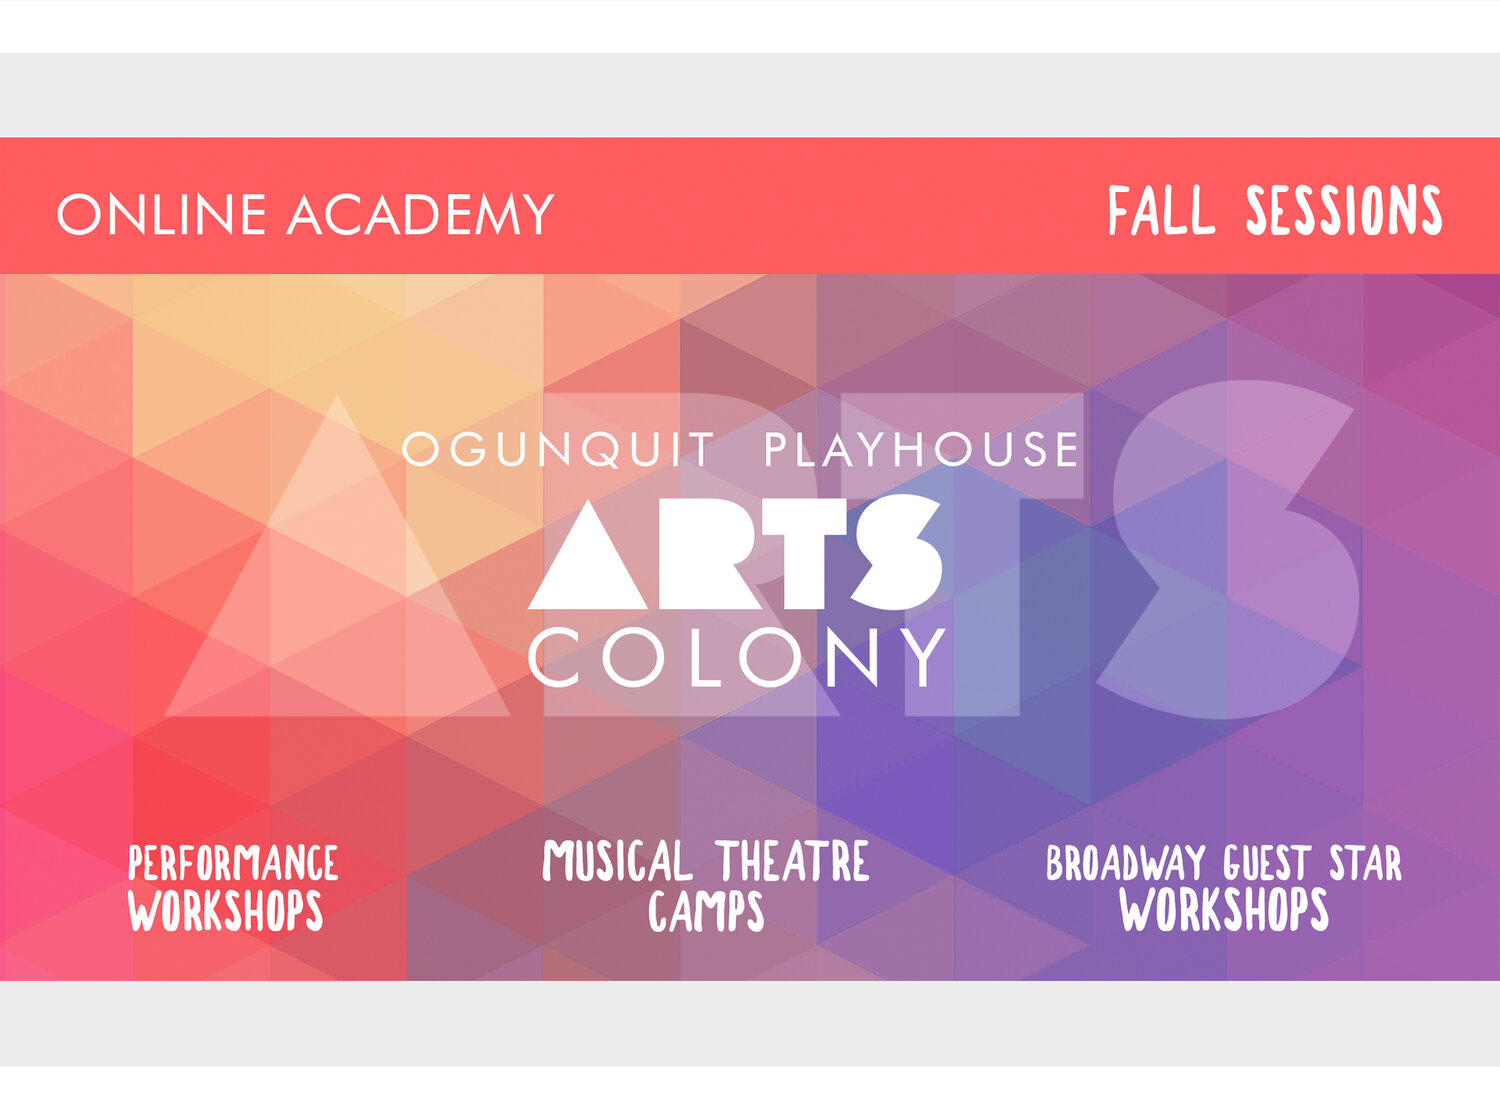 Broadway Guest Artist Workshops